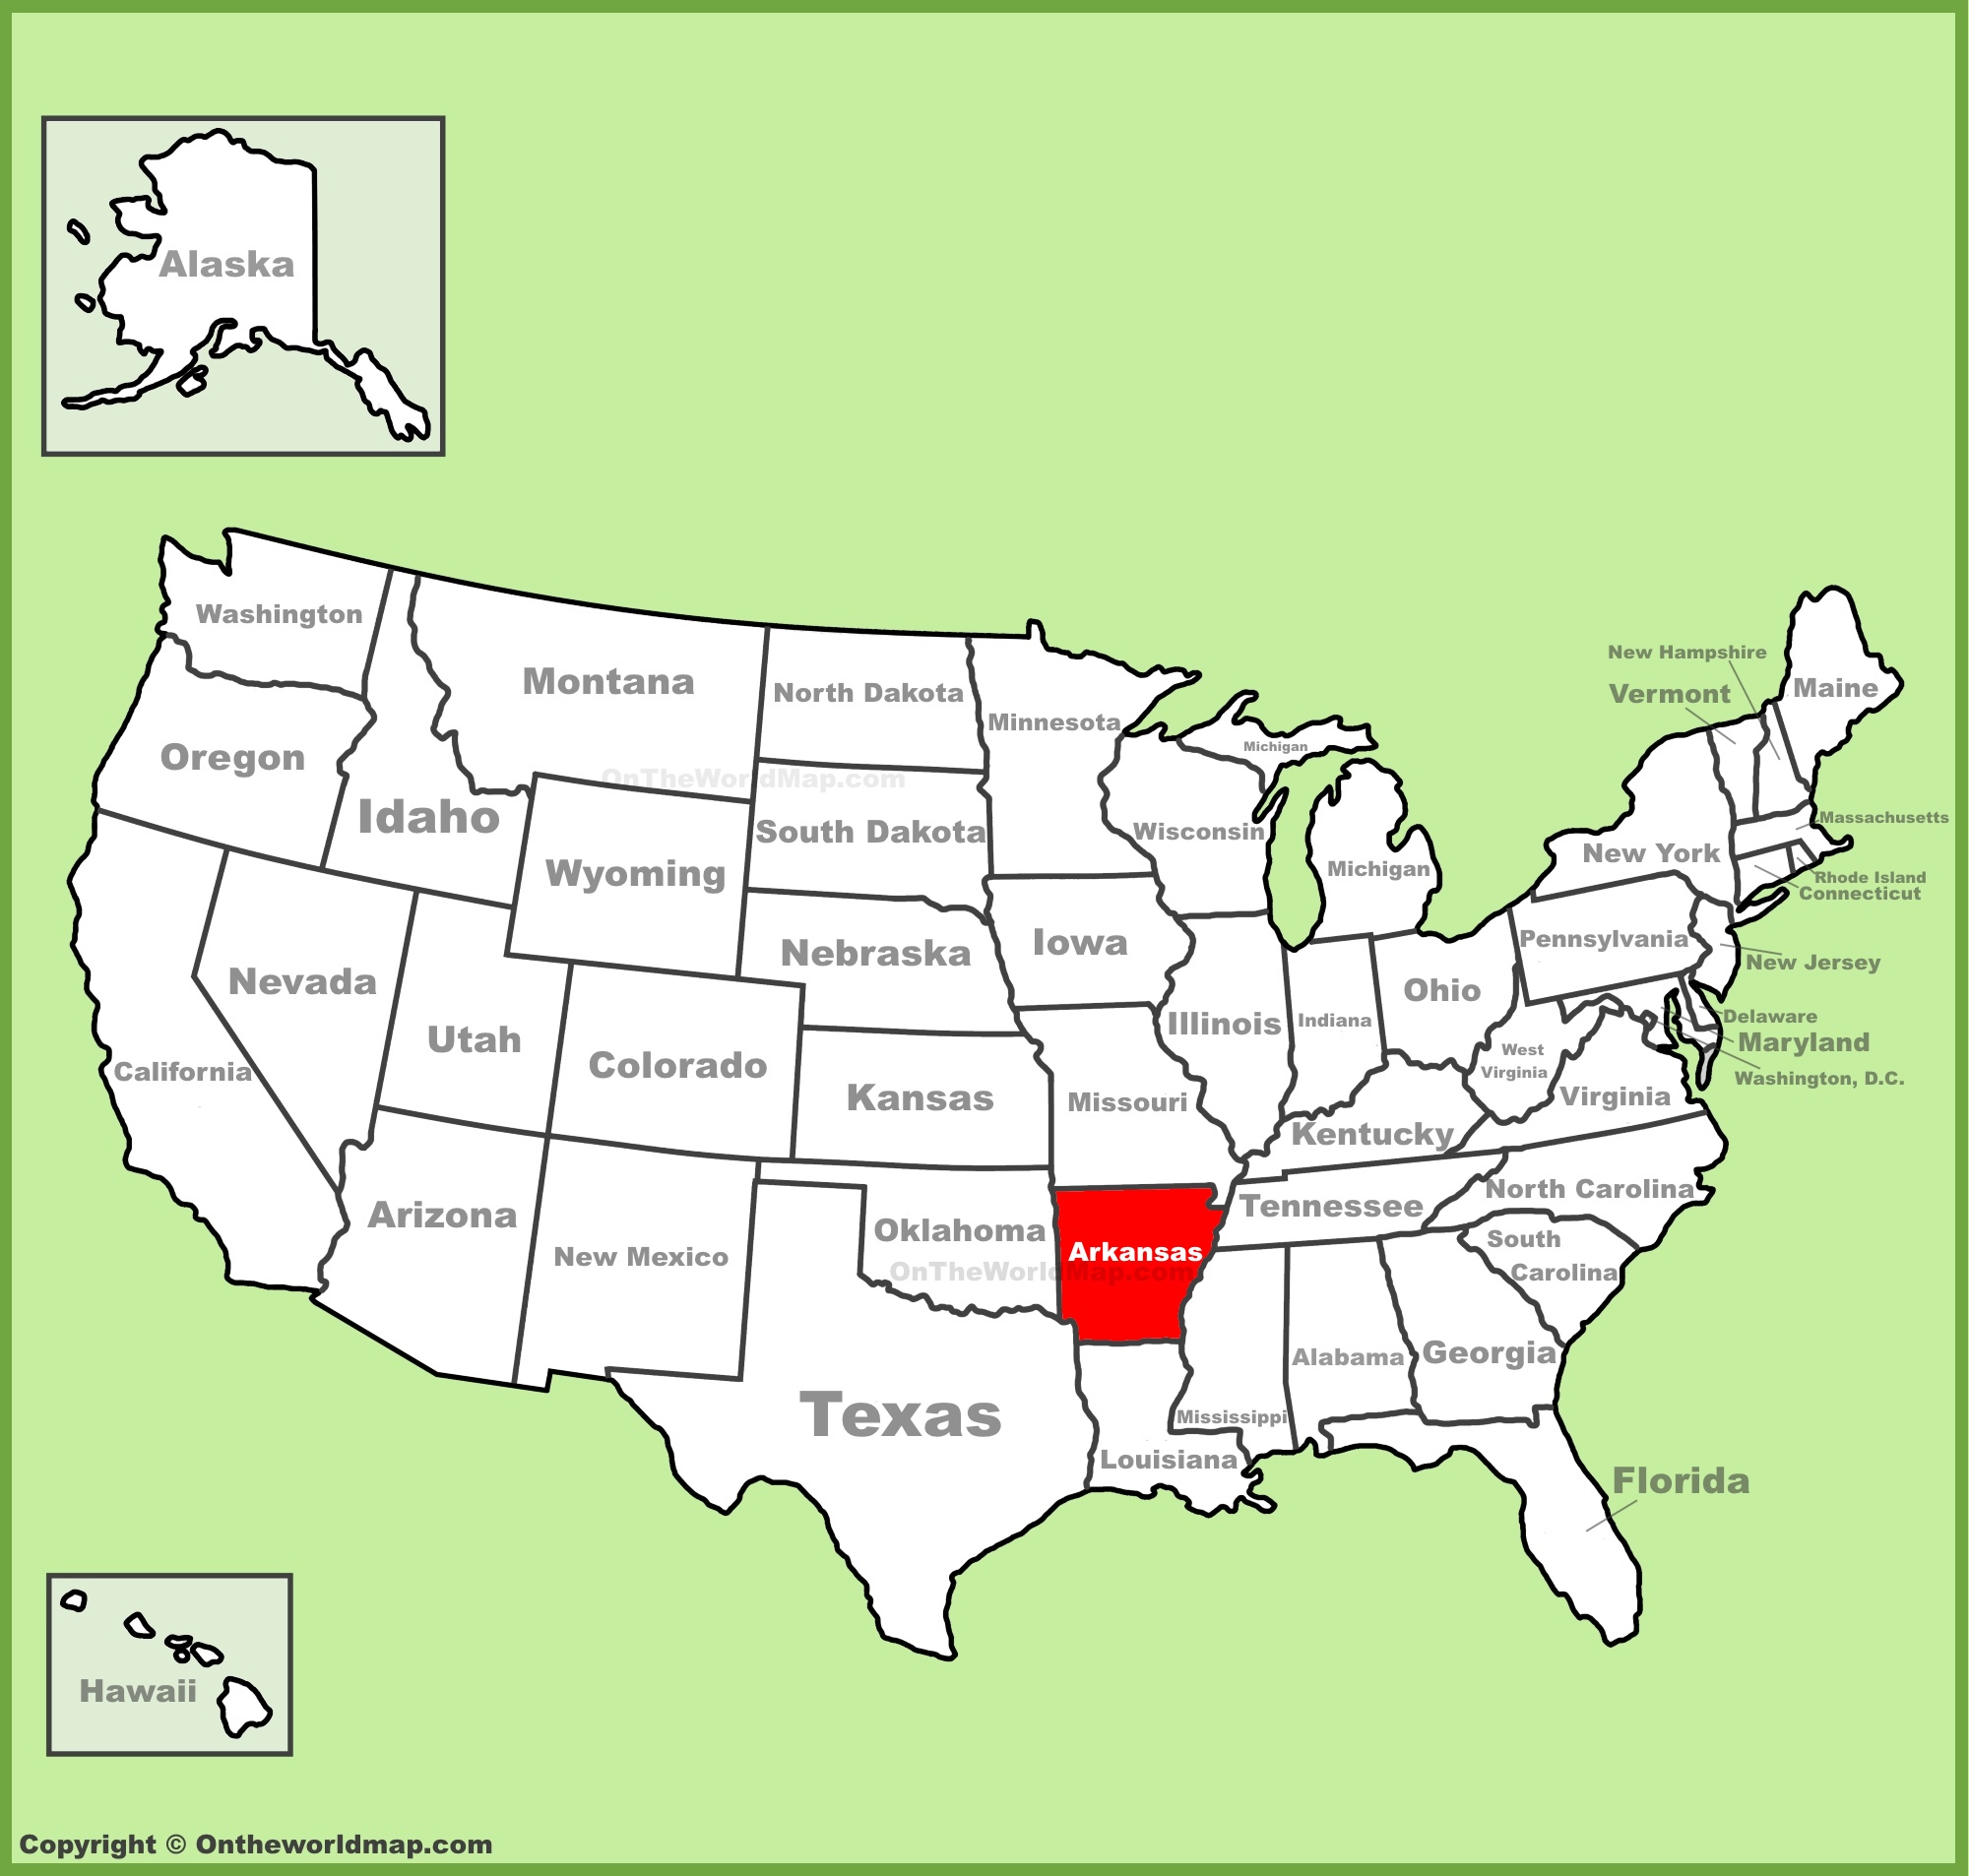 Arkansas location on the U.S. Map ﻿